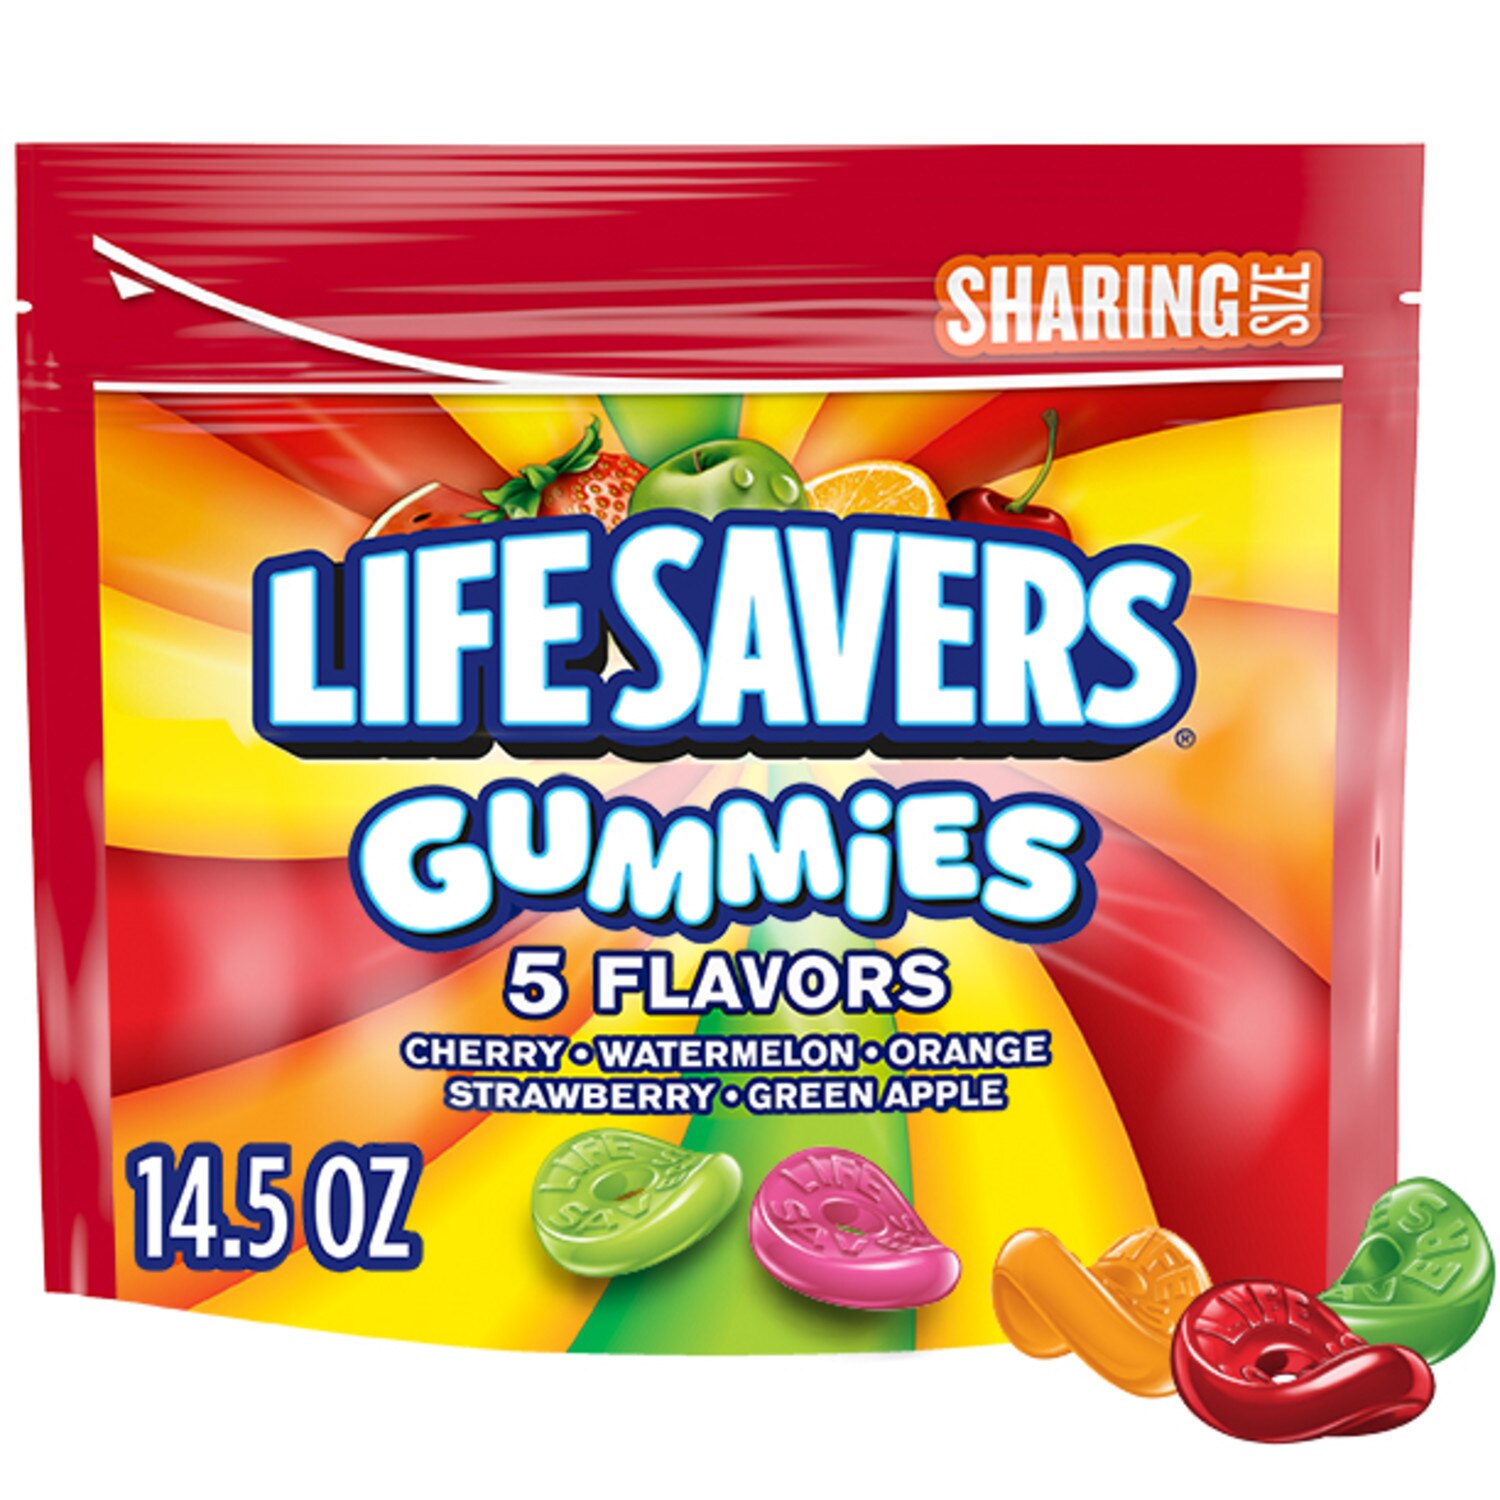 Life Savers Gummies 5 Flavors Candy, Sharing Size Bag, 14.5 OZ